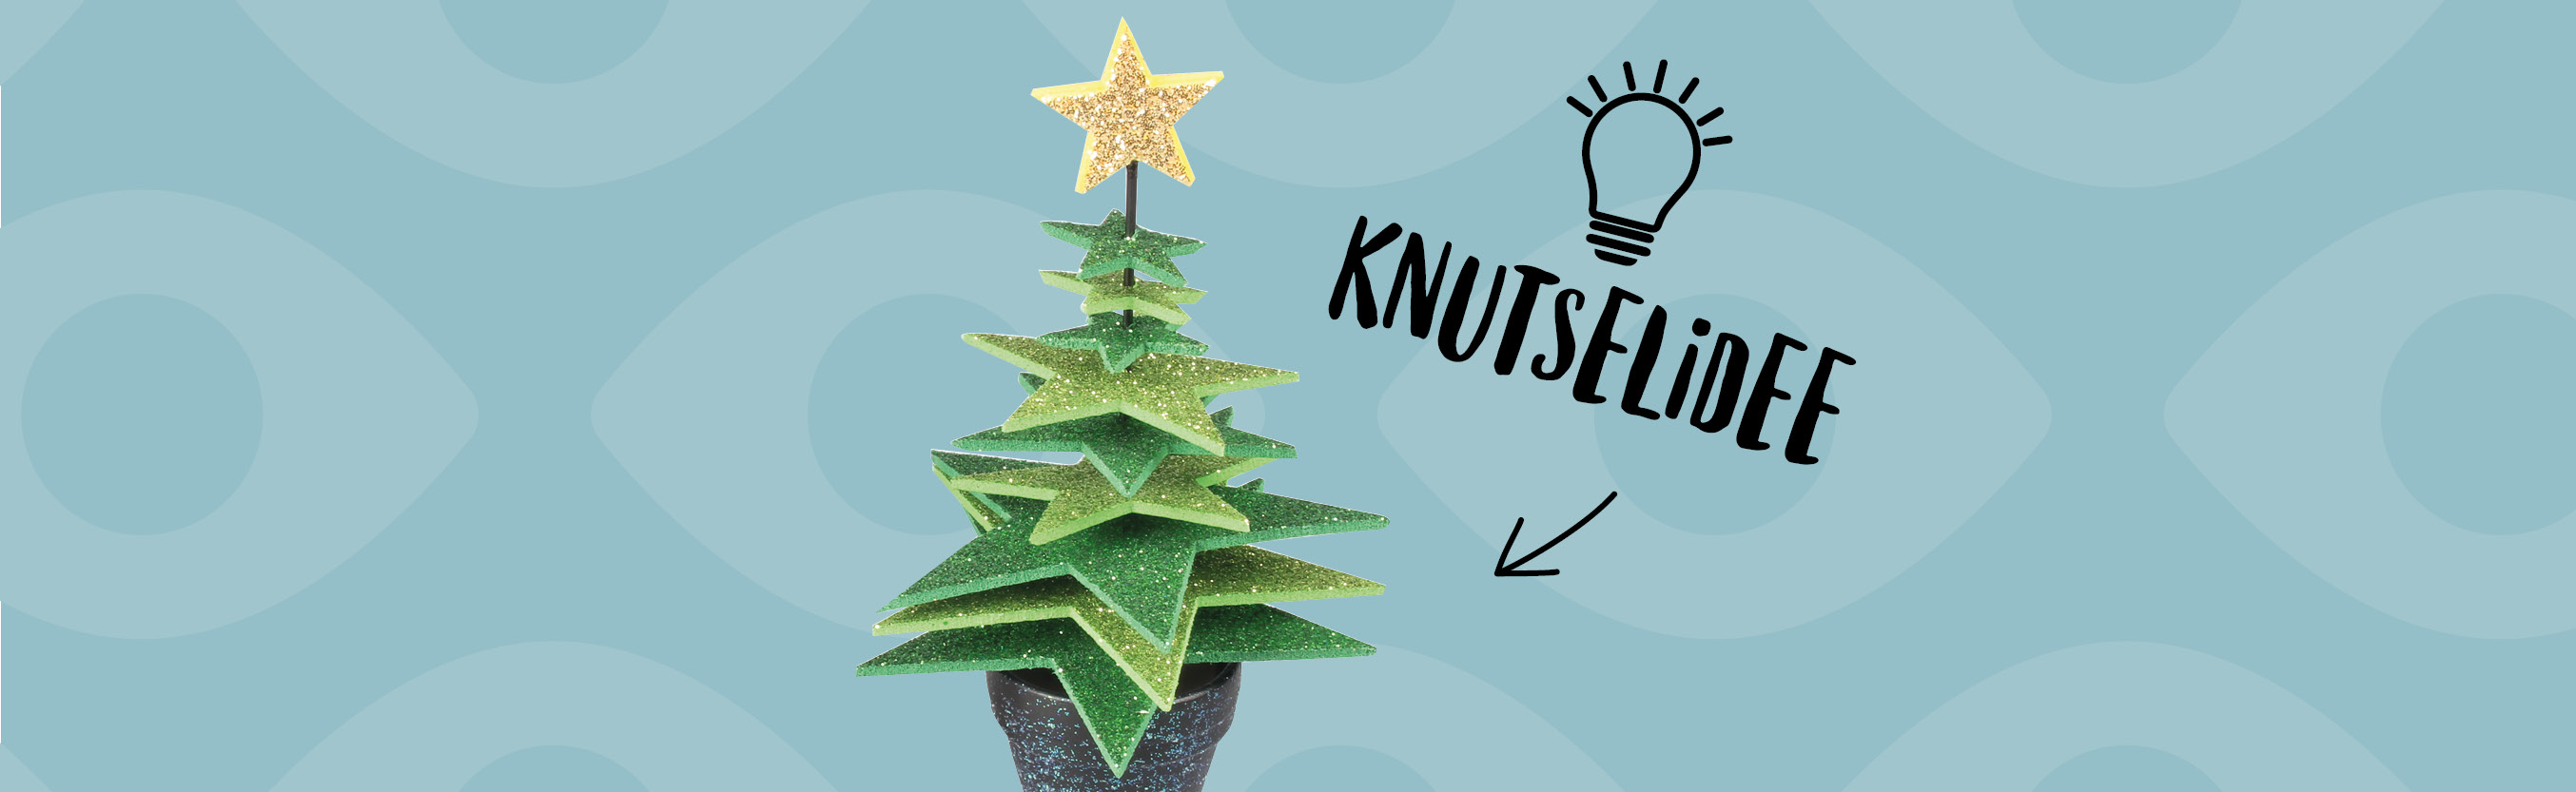 Knutselidee / Knutseltip: Schitterende kerstbomen